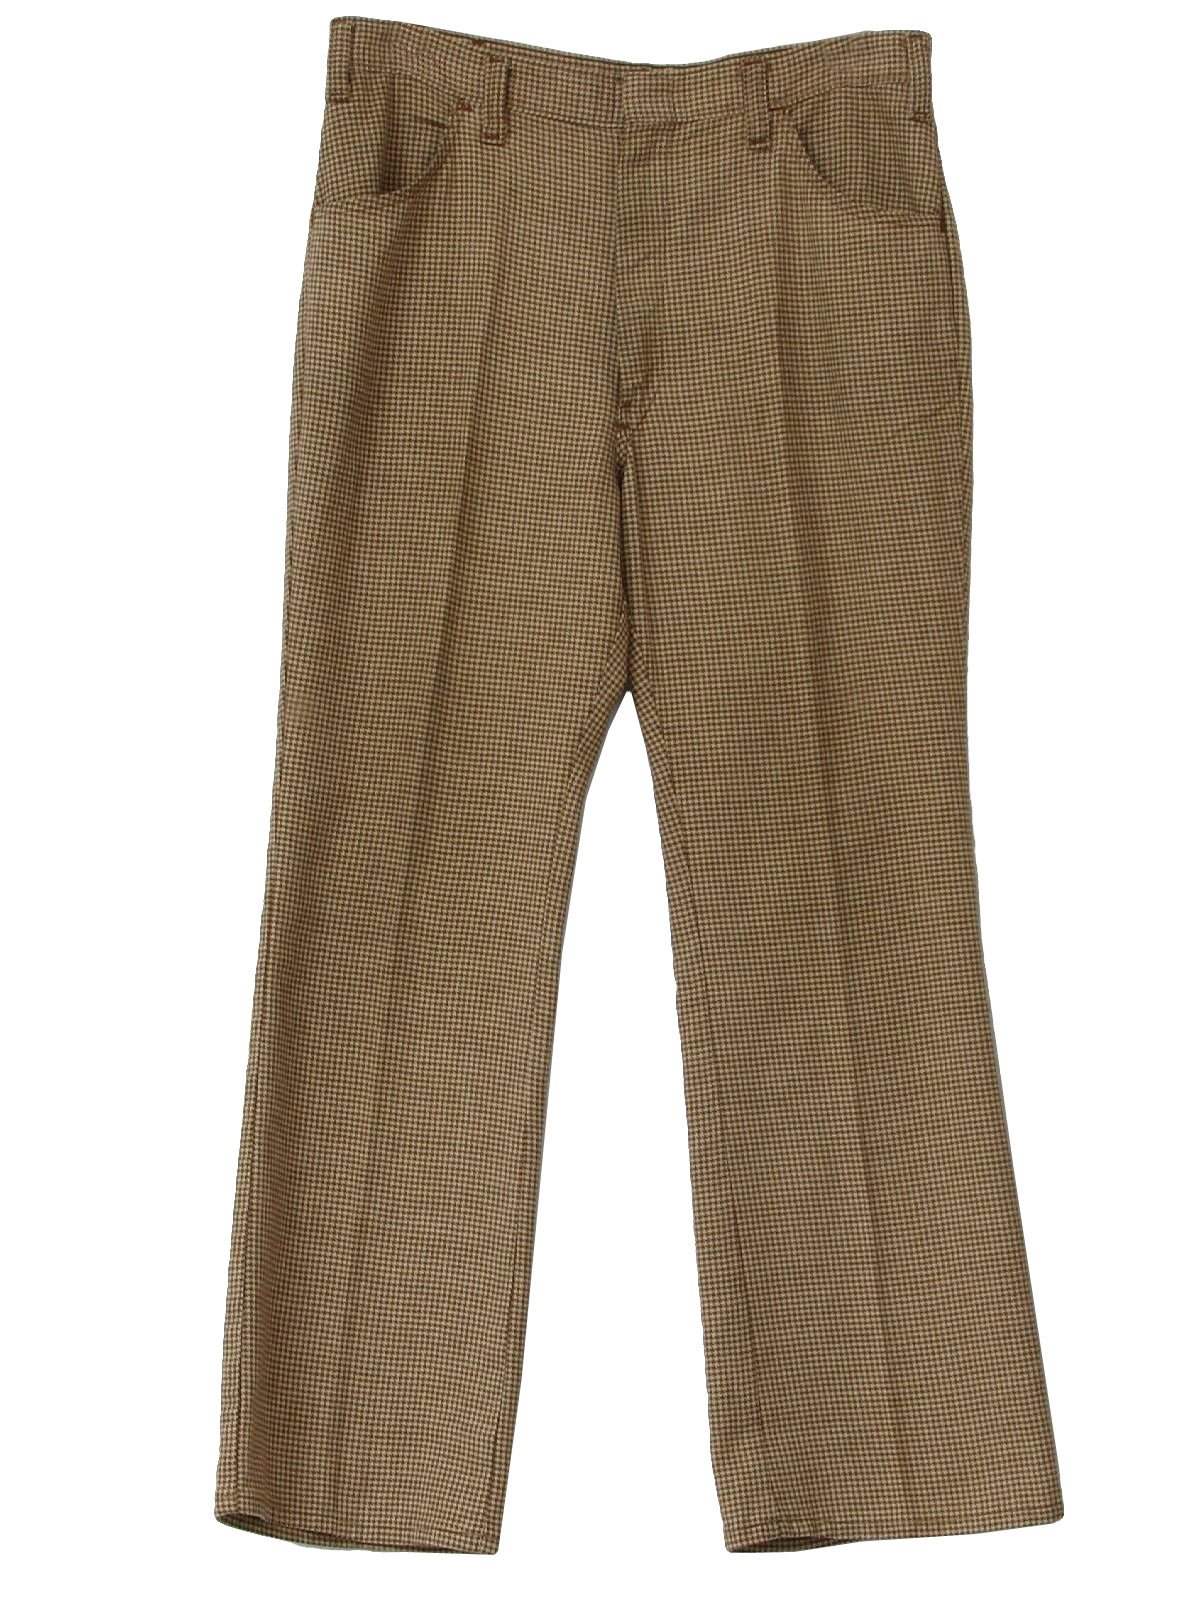 70s Retro Pants: 70s -No Label- Mens tan and dark brown checkered ...